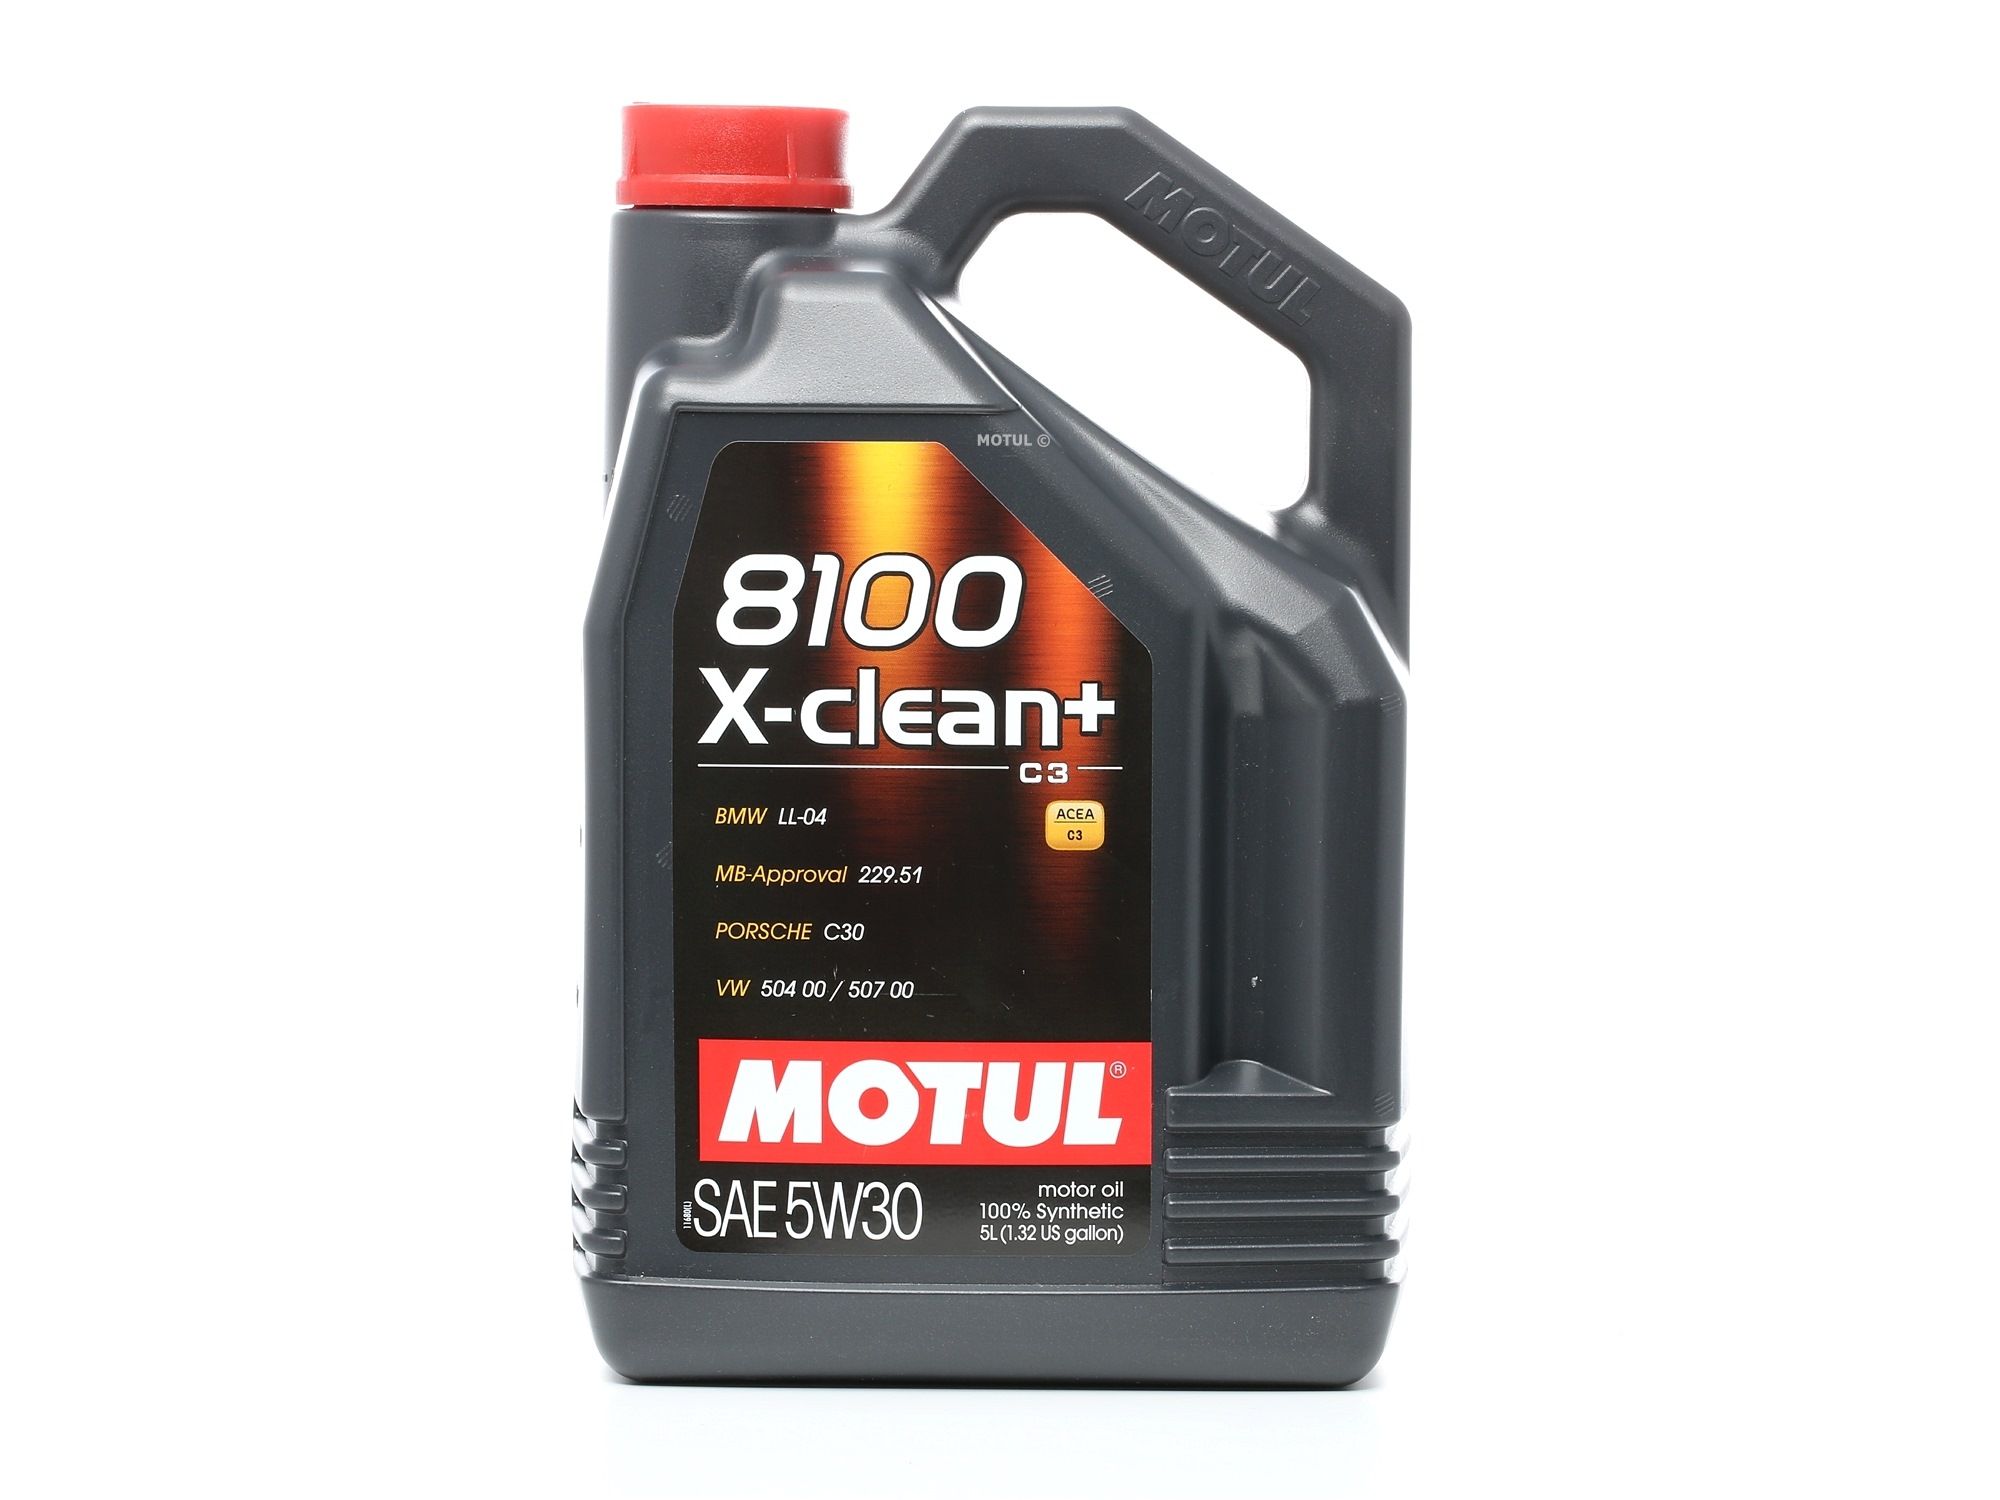 Skoda Motoröl MOTUL 5W-30 zum günstigen Preis